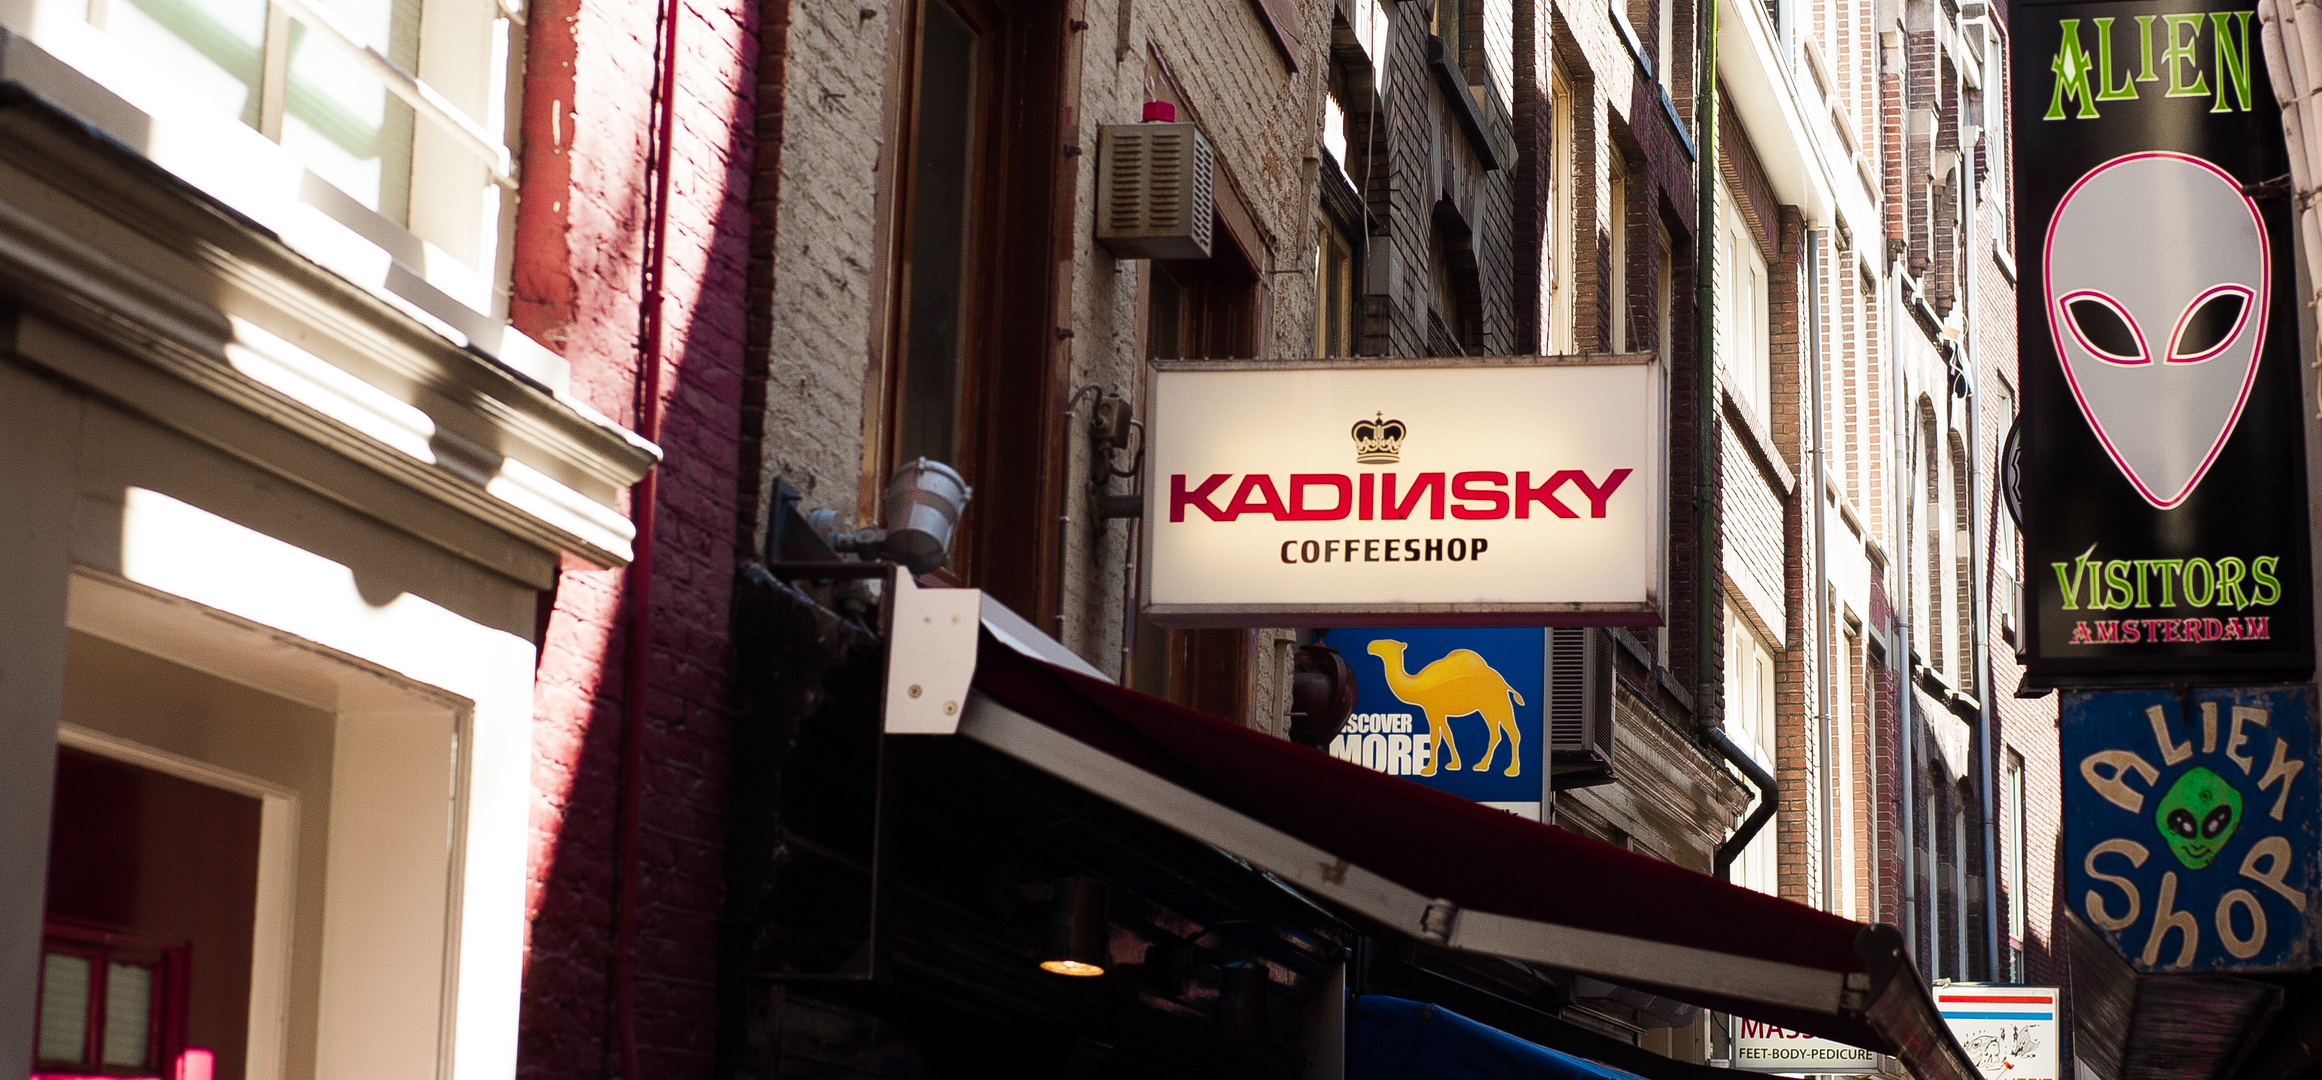 Kadinsky!!! .... the place to be!!!